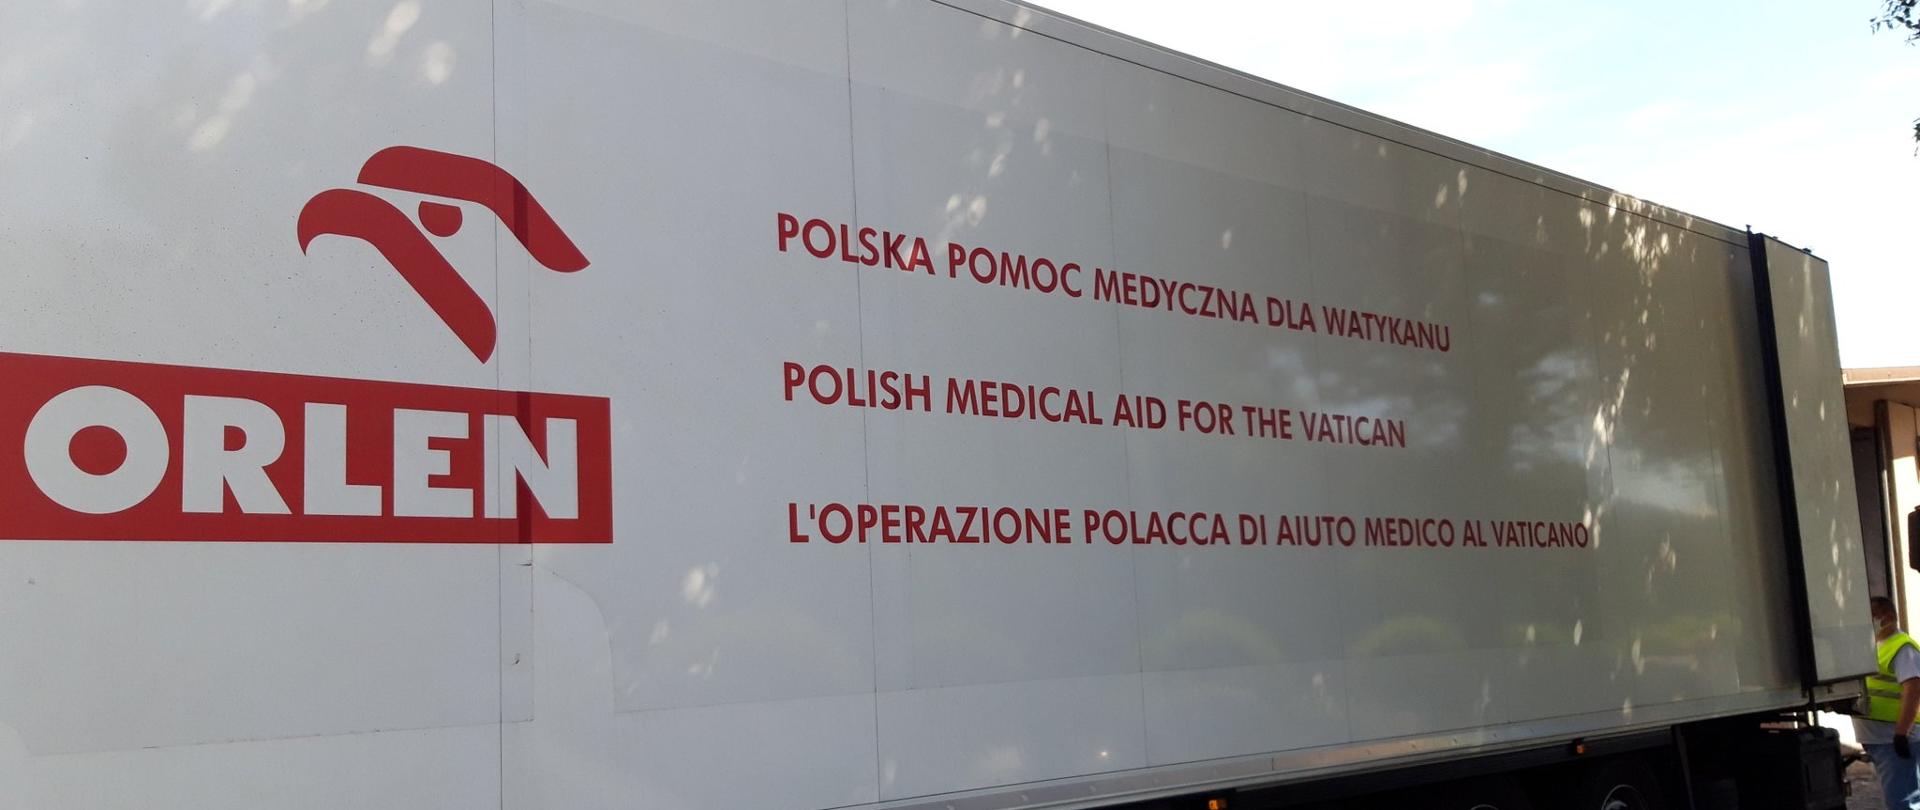 Polska wspiera Watykan w walce z pandemią